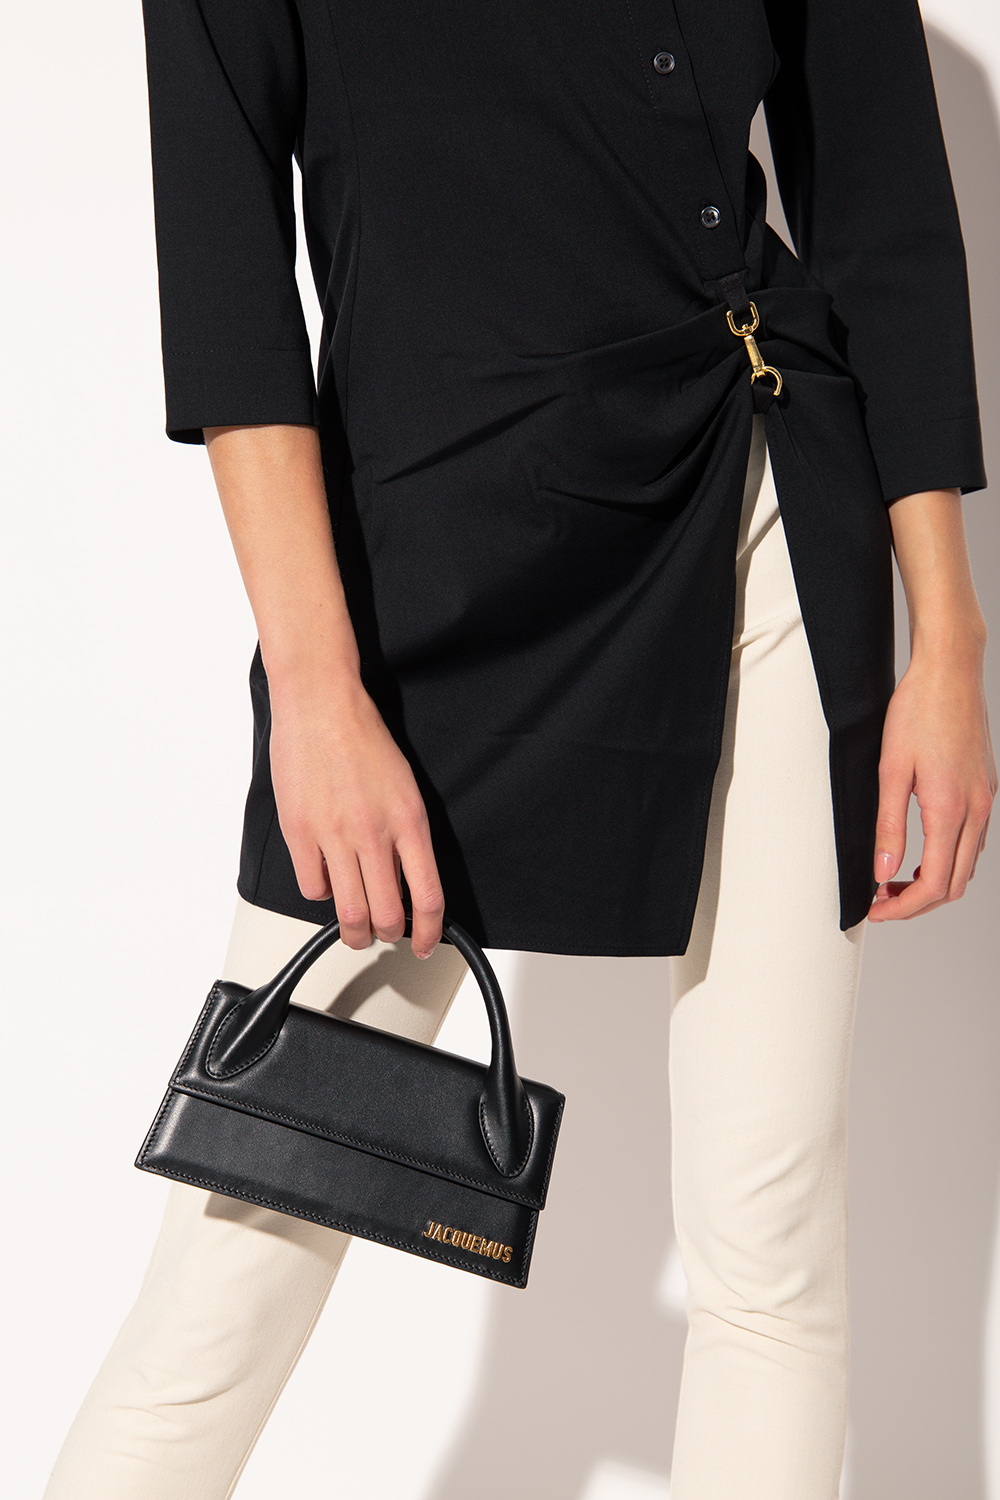 Jacquemus Le Chiquito Long Black Leather Top Handle Bag, Bag